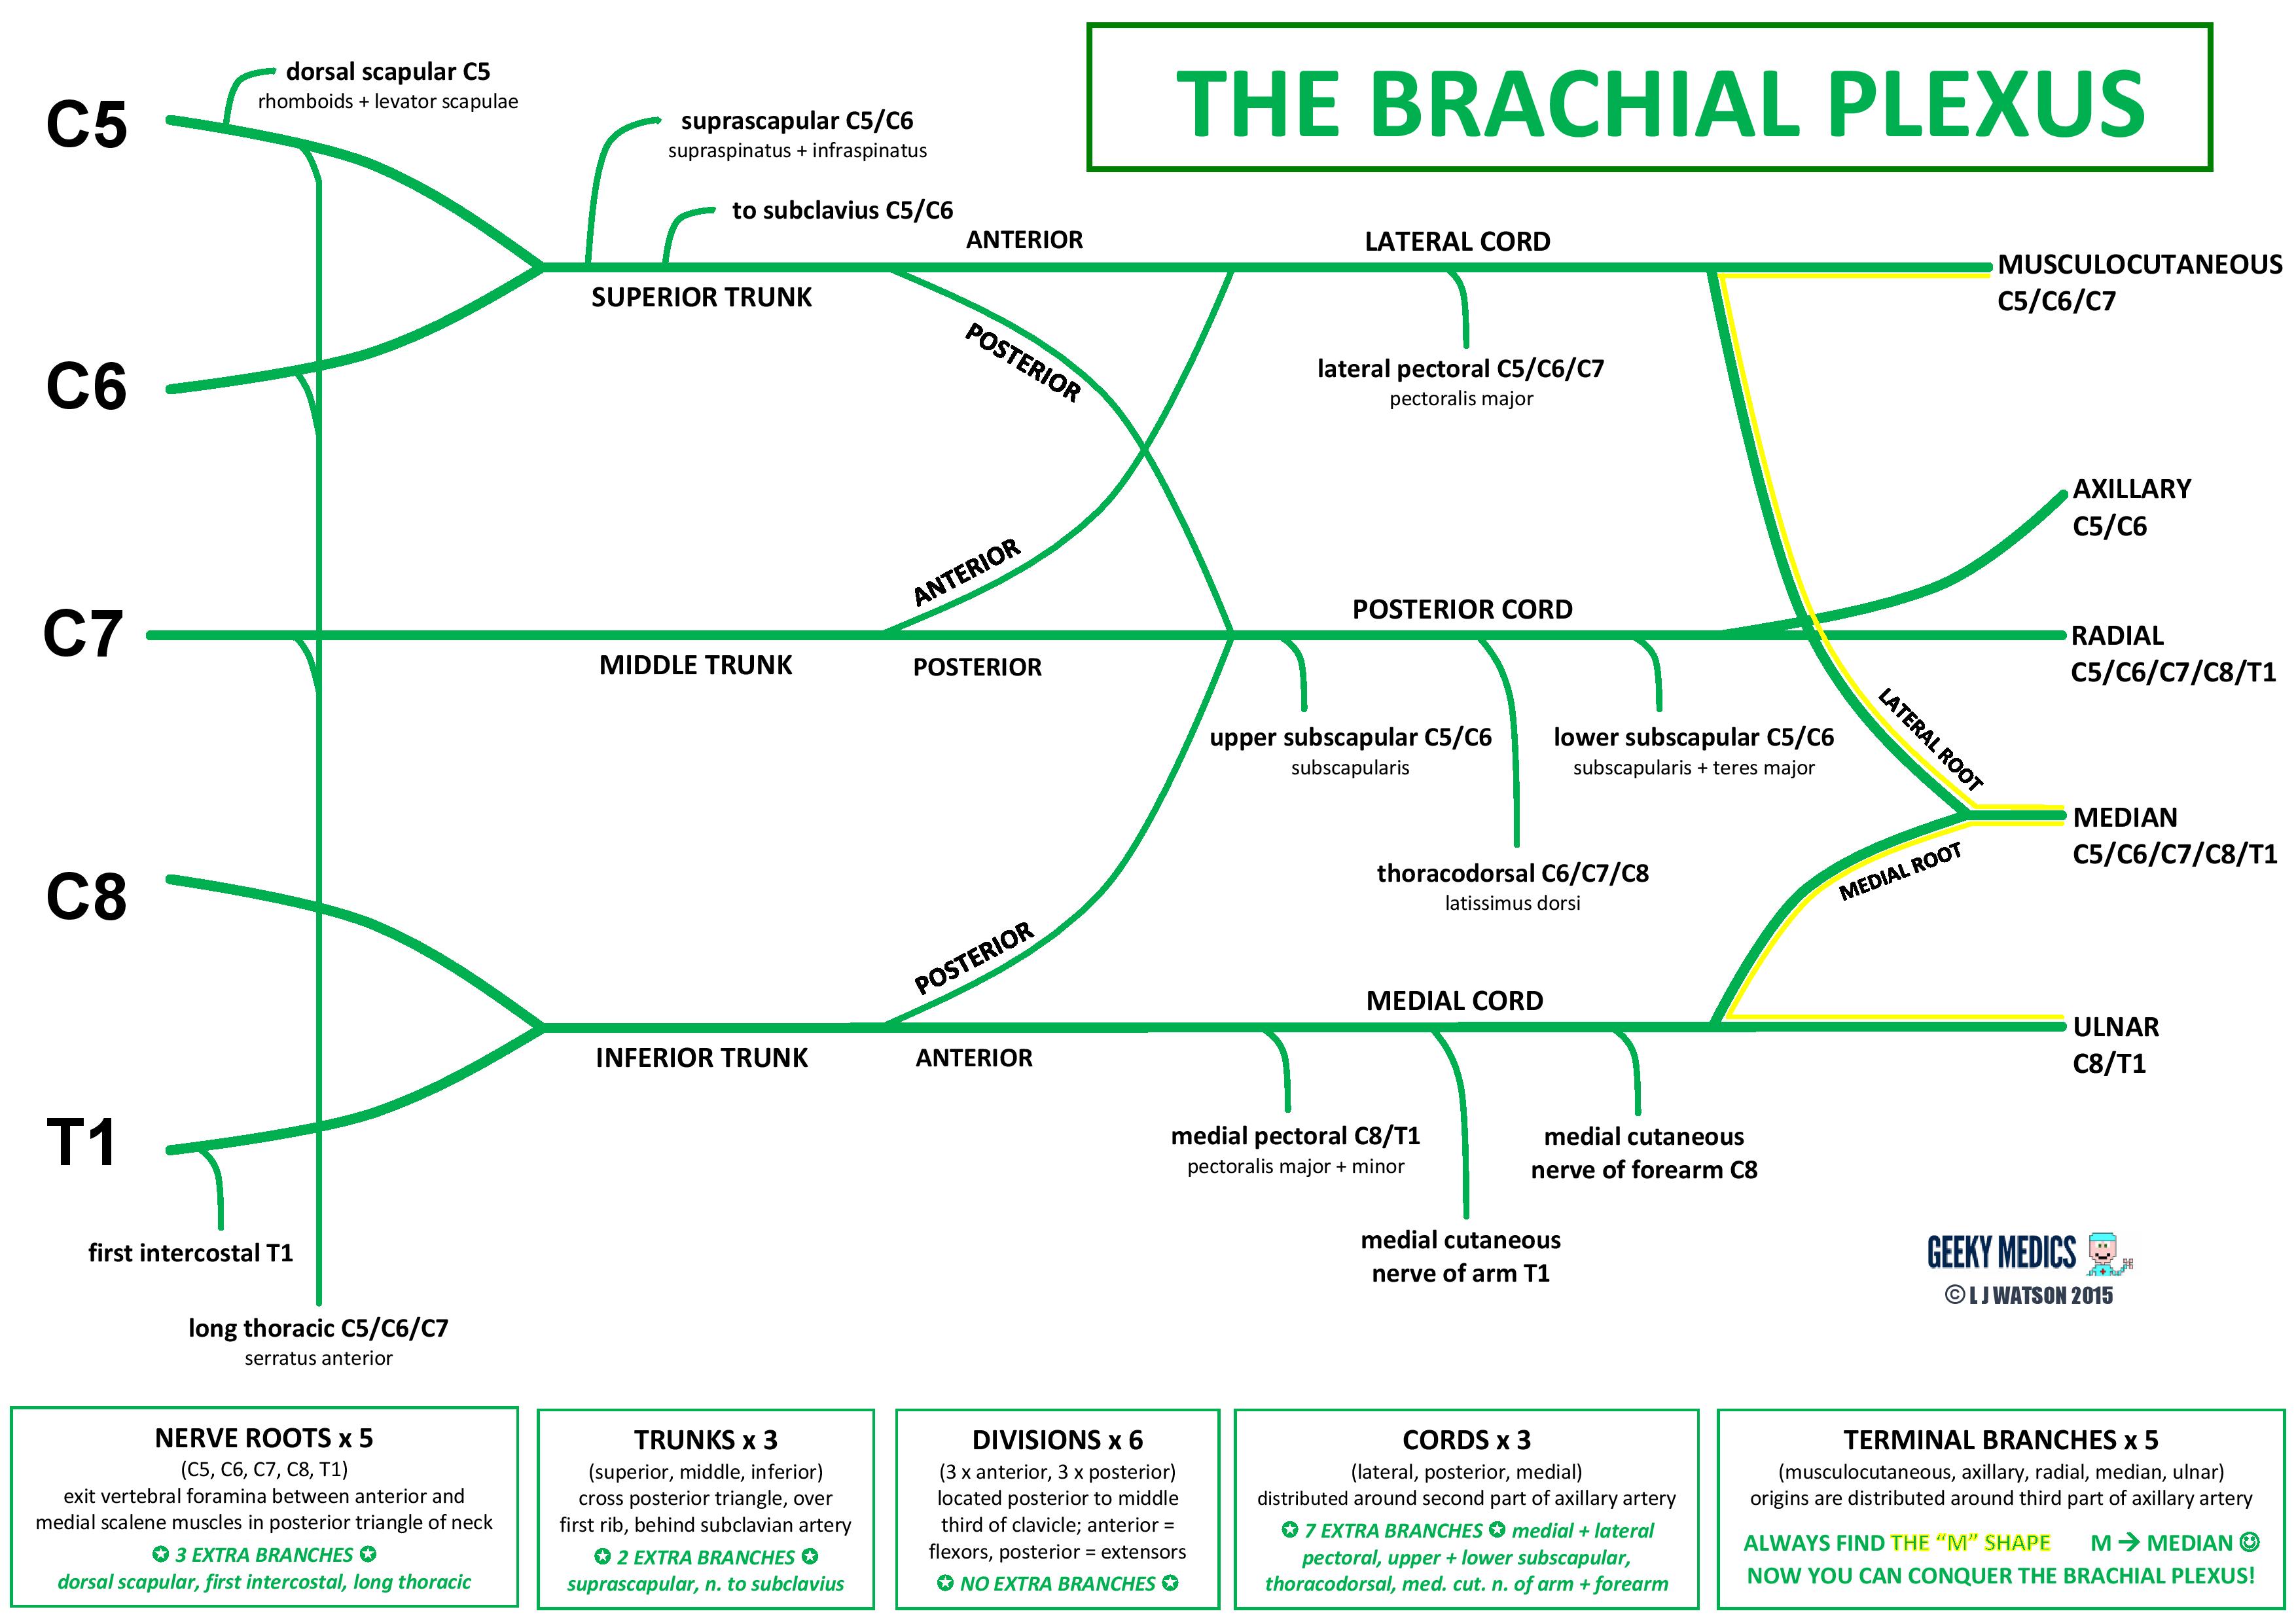 Brachial Plexus Injuries Chart